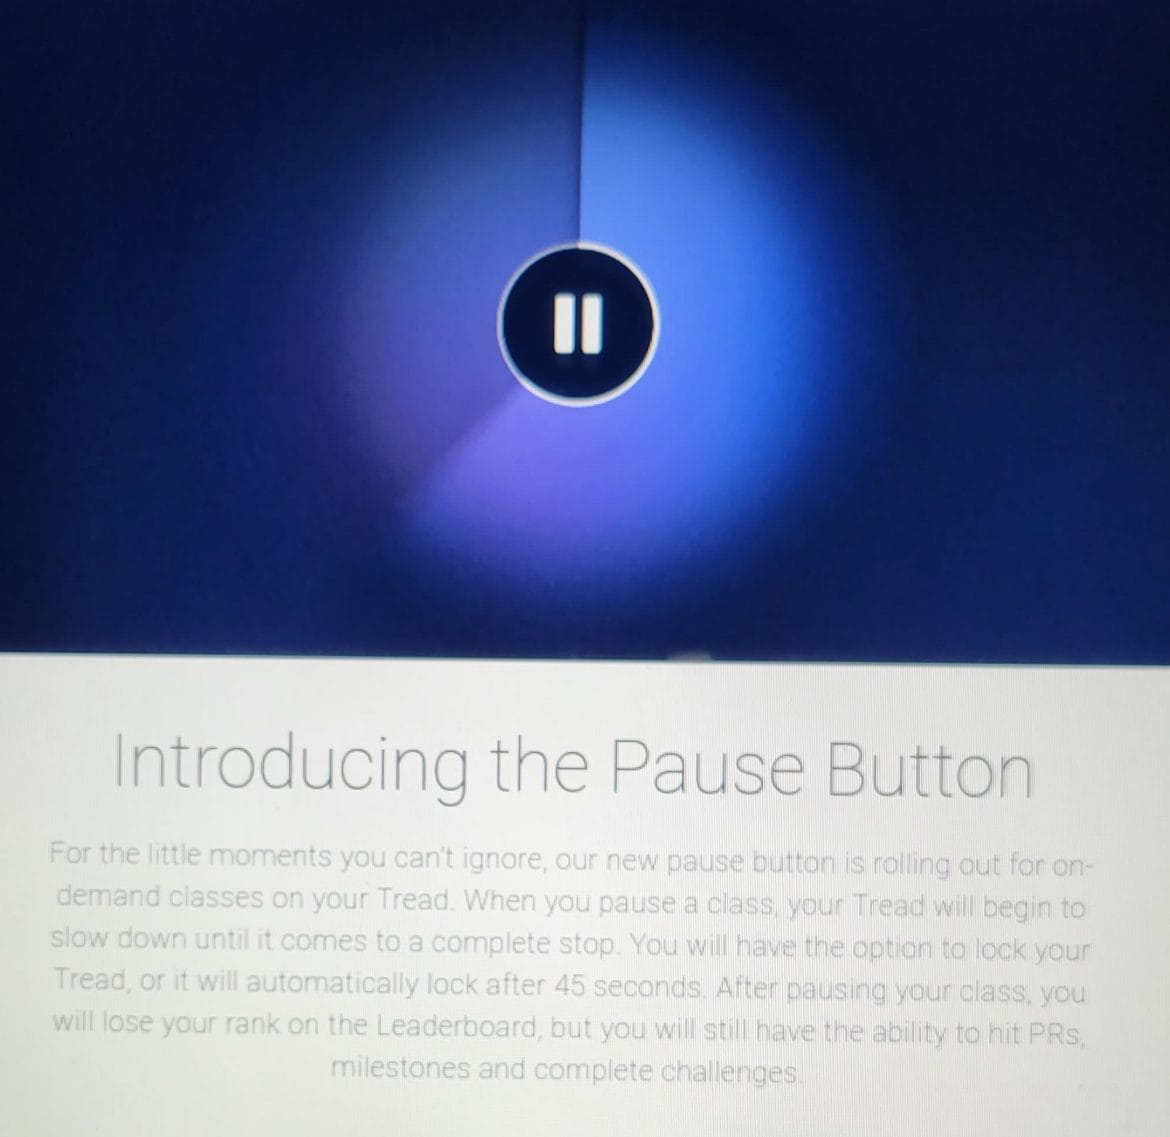 Pause button pop-up on Peloton Tread.